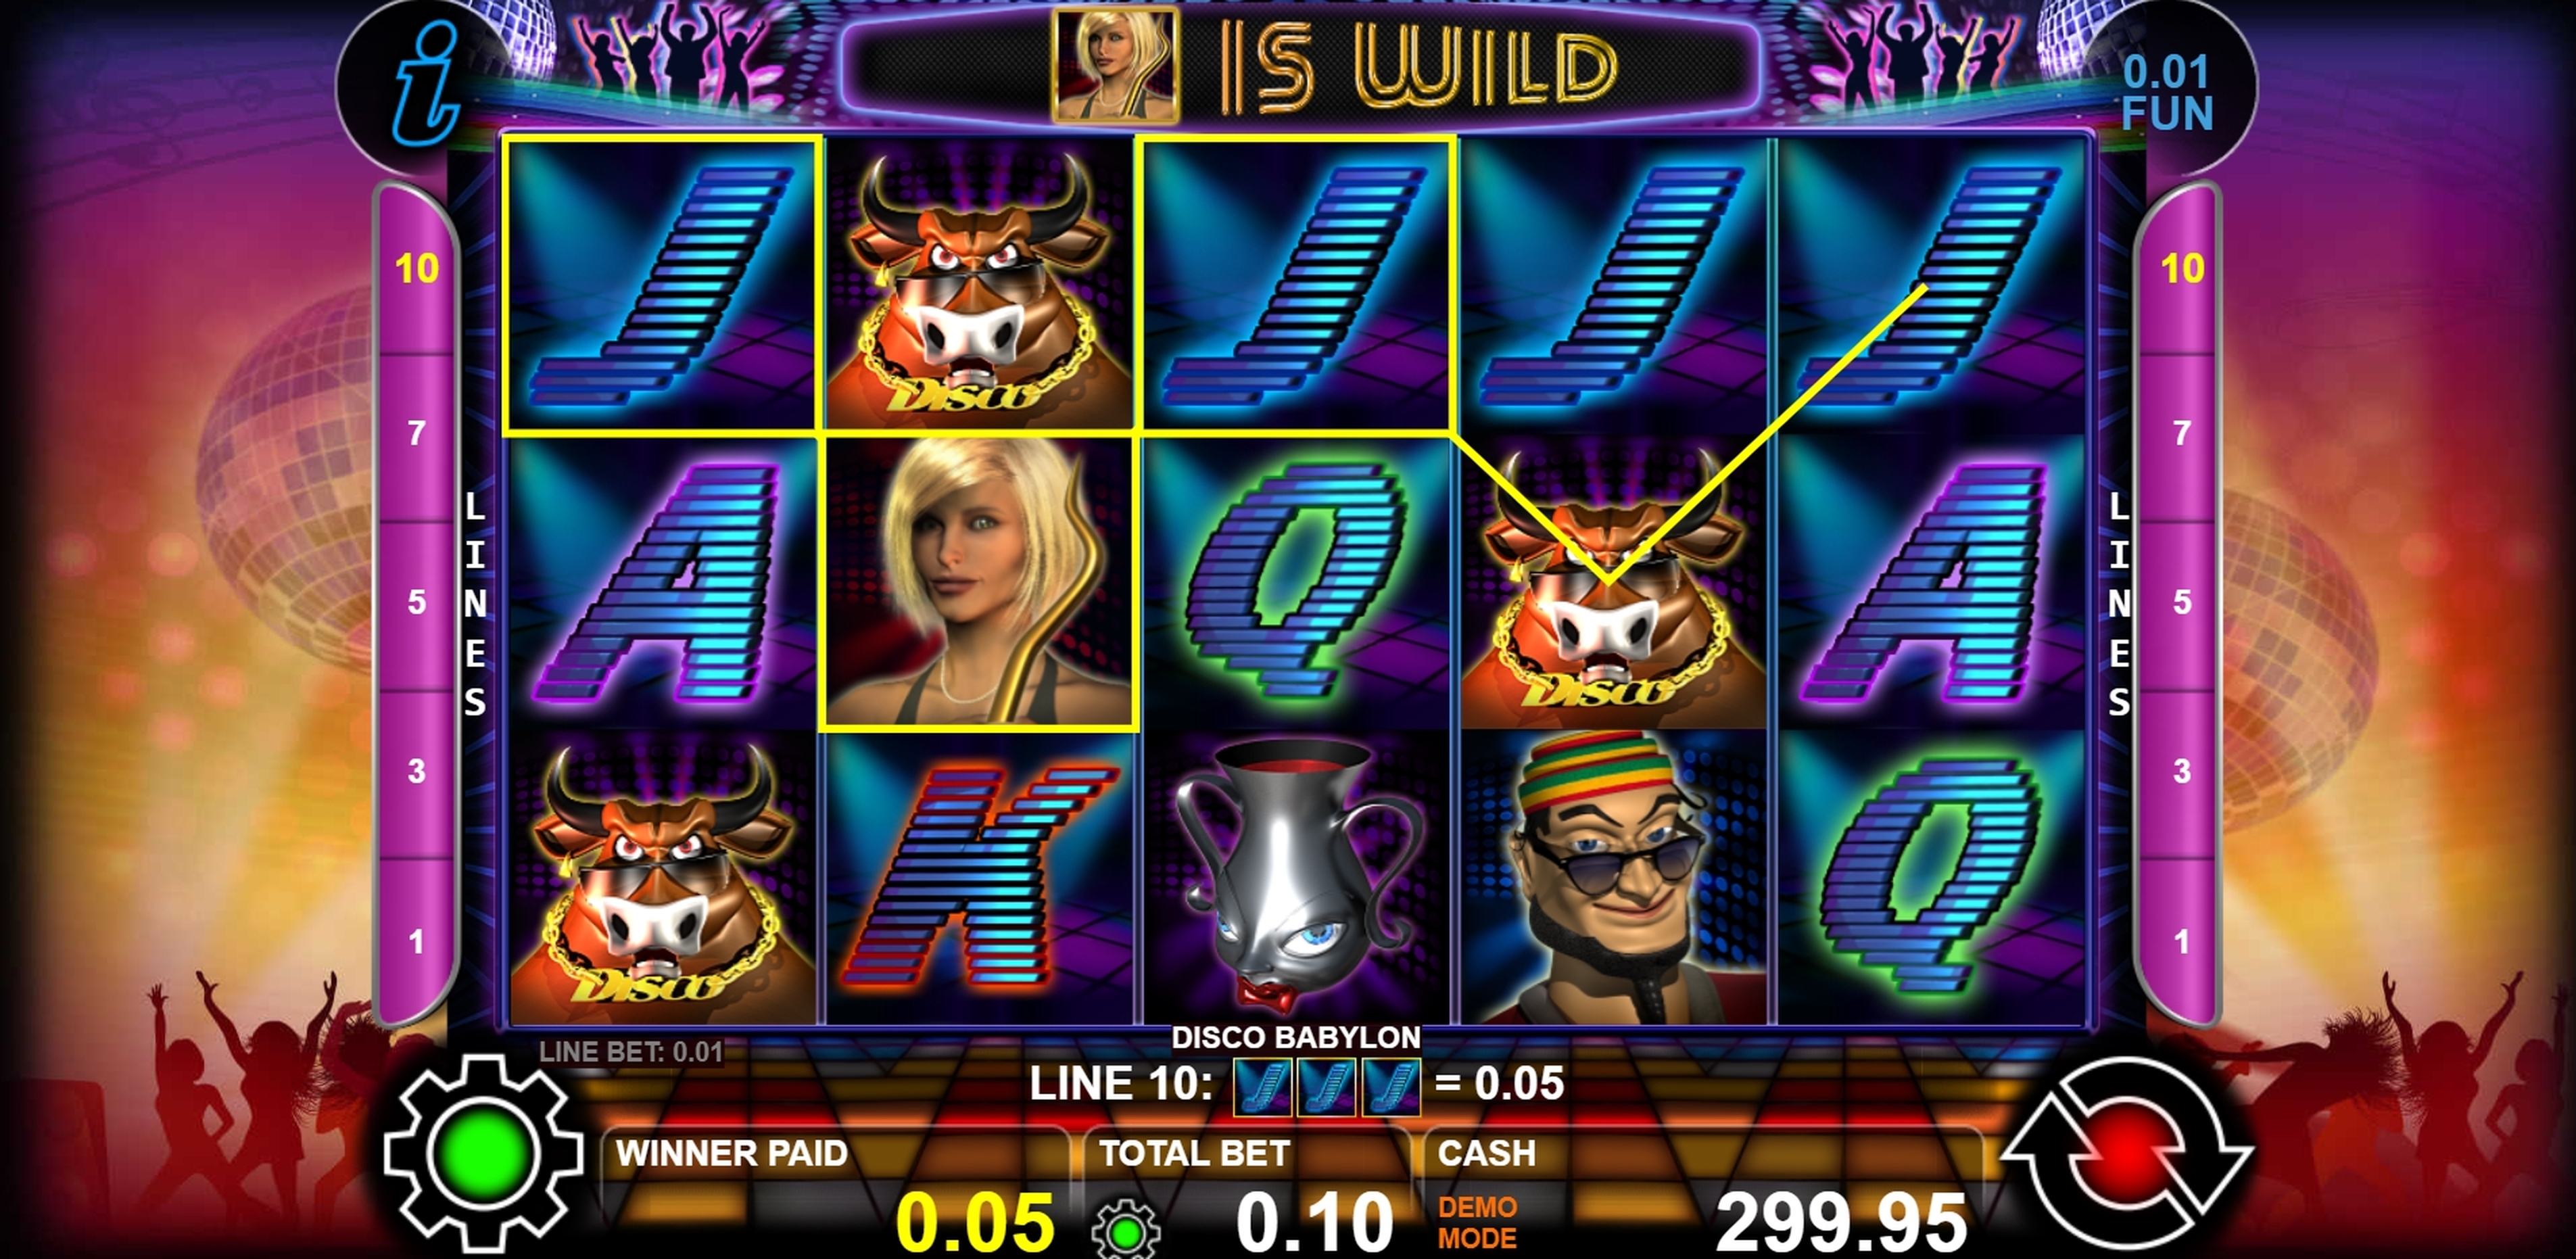 Win Money in Disco Babylon Free Slot Game by casino technology